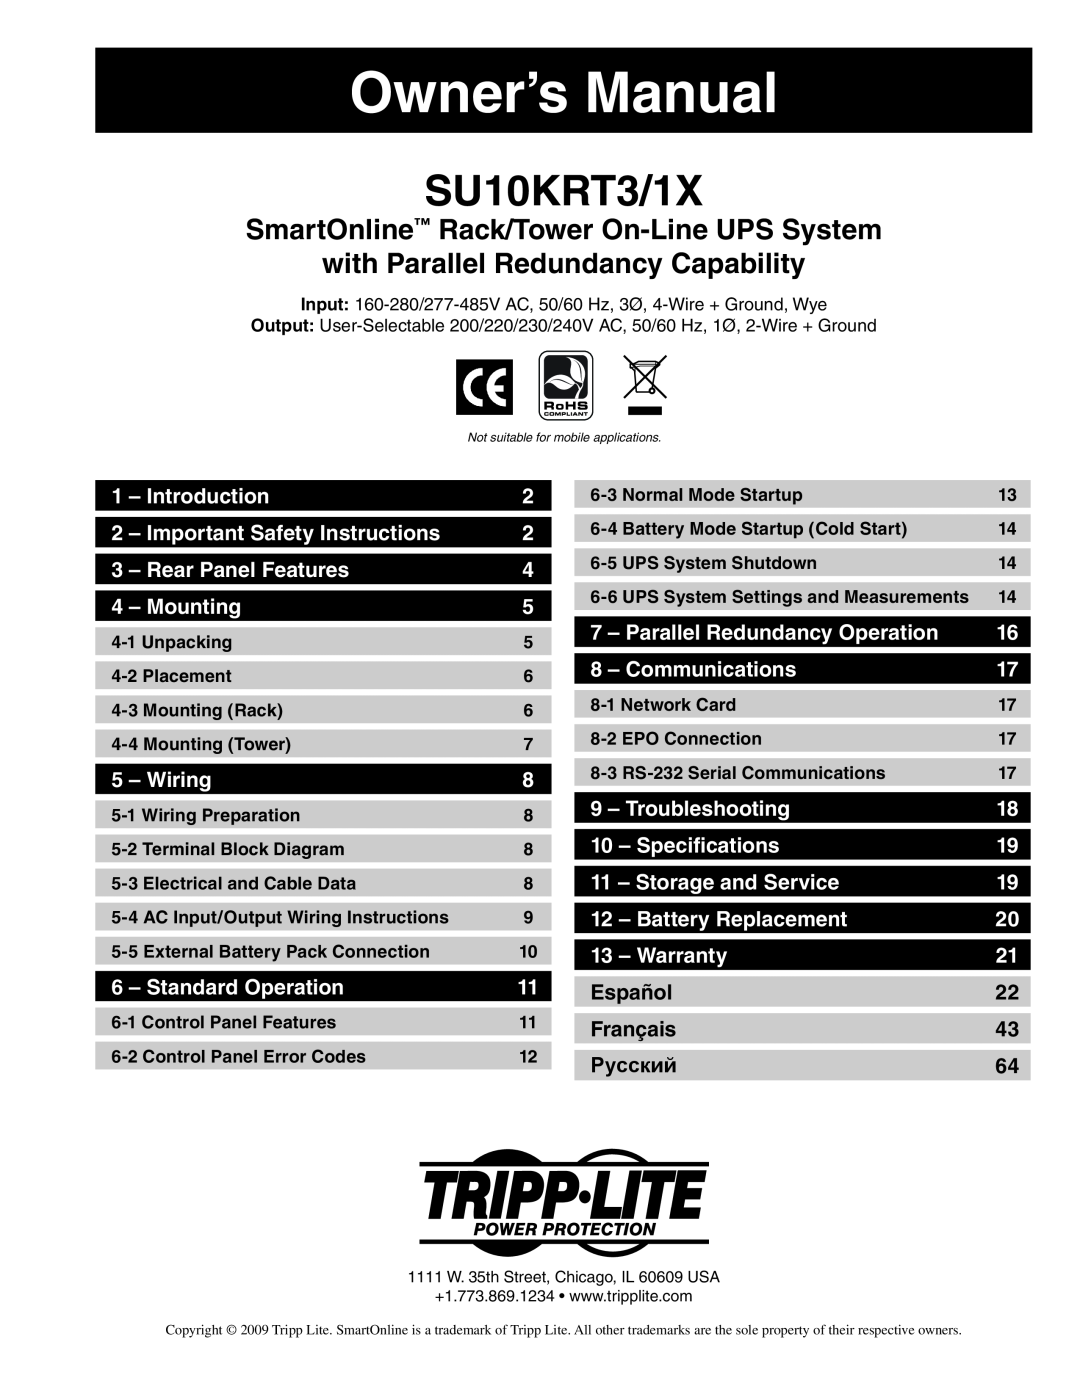 Tripp Lite SU10KRT1X owner manual Español, Français, Owner’s Manual, SU10KRT3/1X, with Parallel Redundancy Capability 